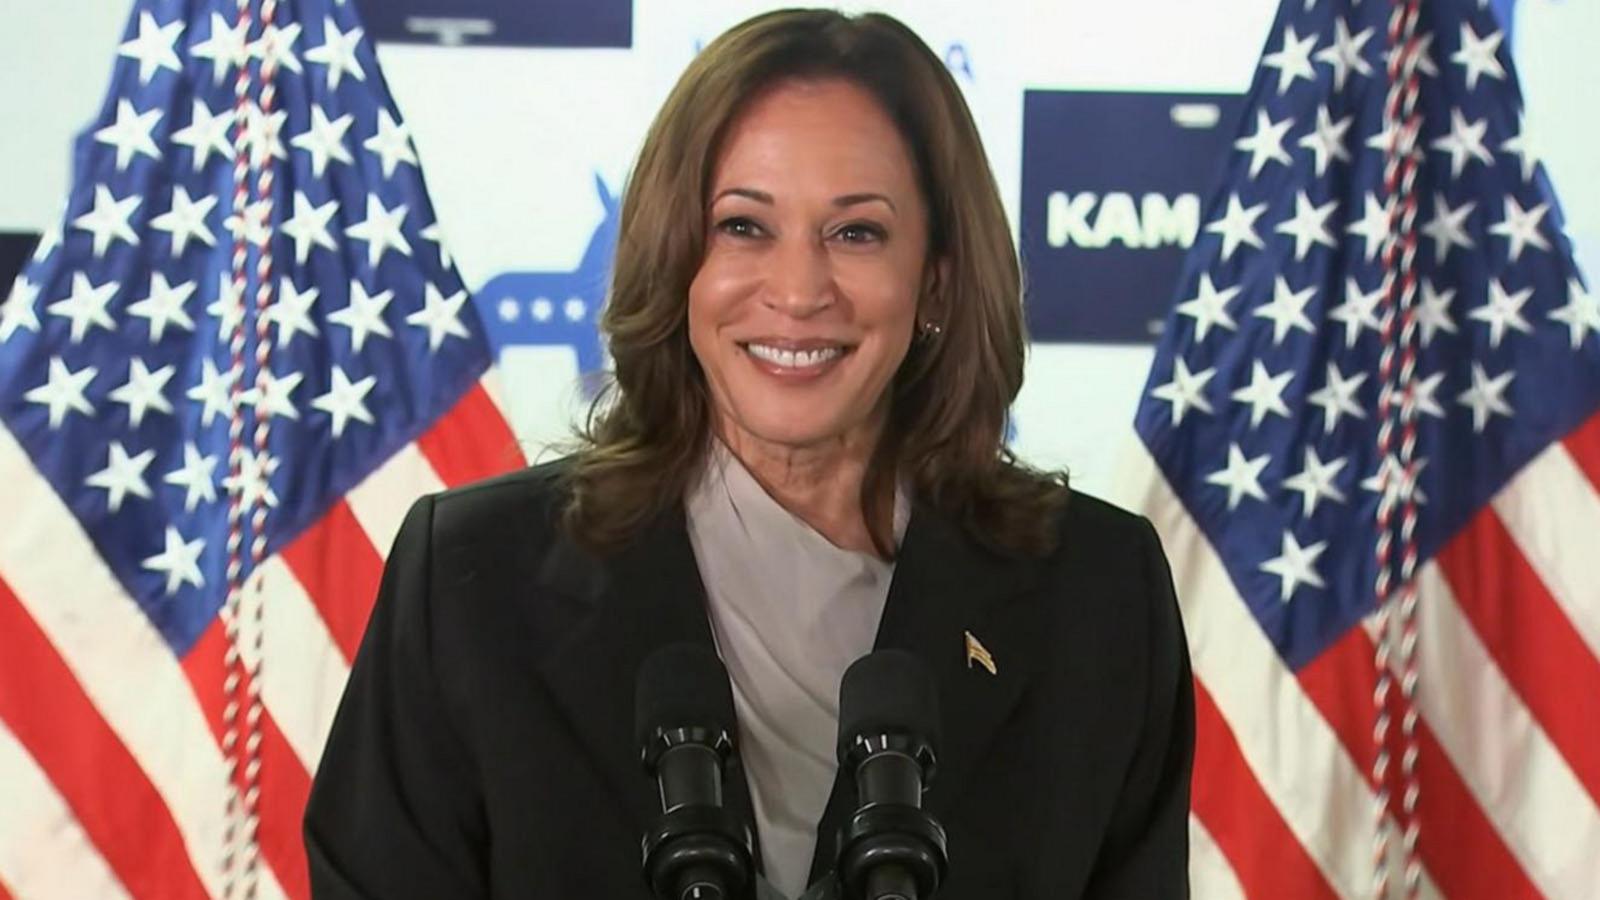 abcnews.go.com - Deborah Kim - Kamala Harris to take over for Biden after support from Pelosi, Obama